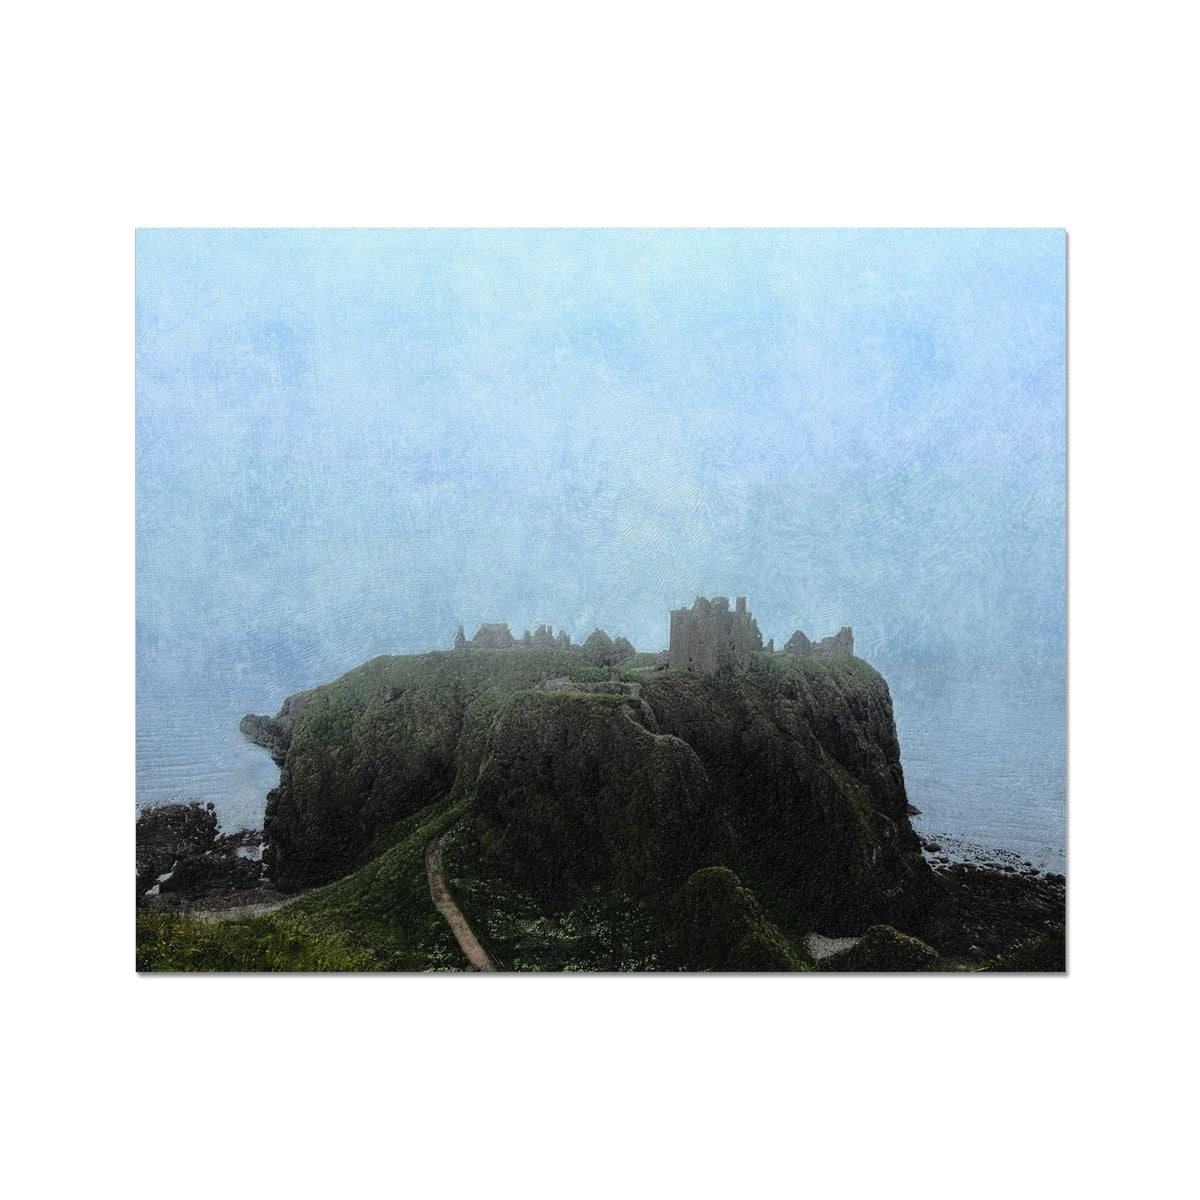 Dunnottar Castle Mist Painting | Artist Proof Collector Prints From Scotland-Artist Proof Collector Prints-Scottish Castles Art Gallery-20"x16"-Paintings, Prints, Homeware, Art Gifts From Scotland By Scottish Artist Kevin Hunter